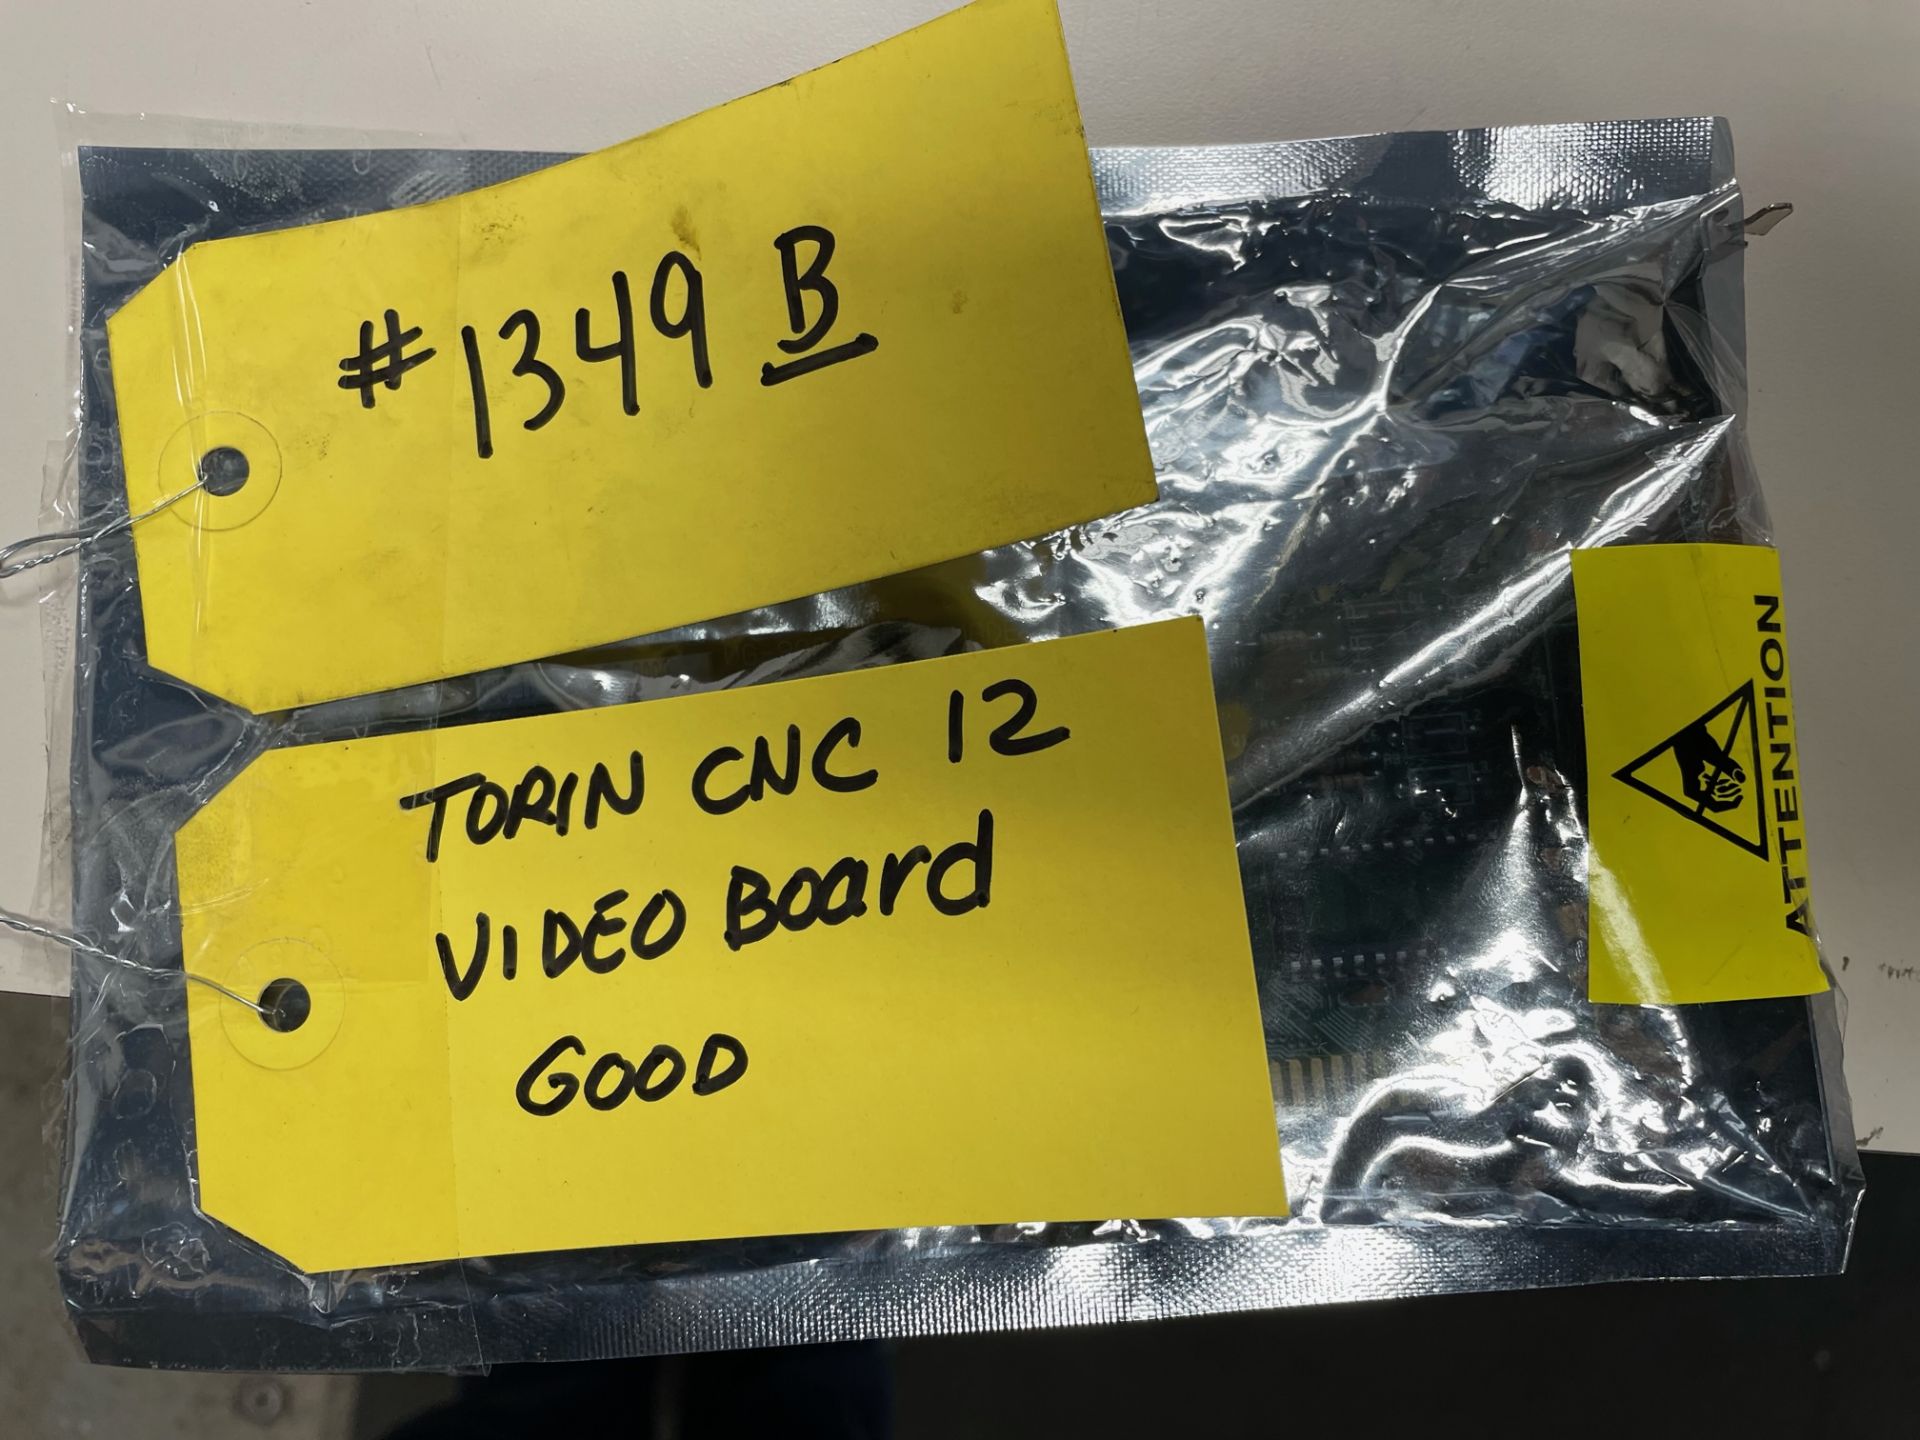 TORIN CNC 12 VIDEO BOARD (GOOD) - Image 2 of 2